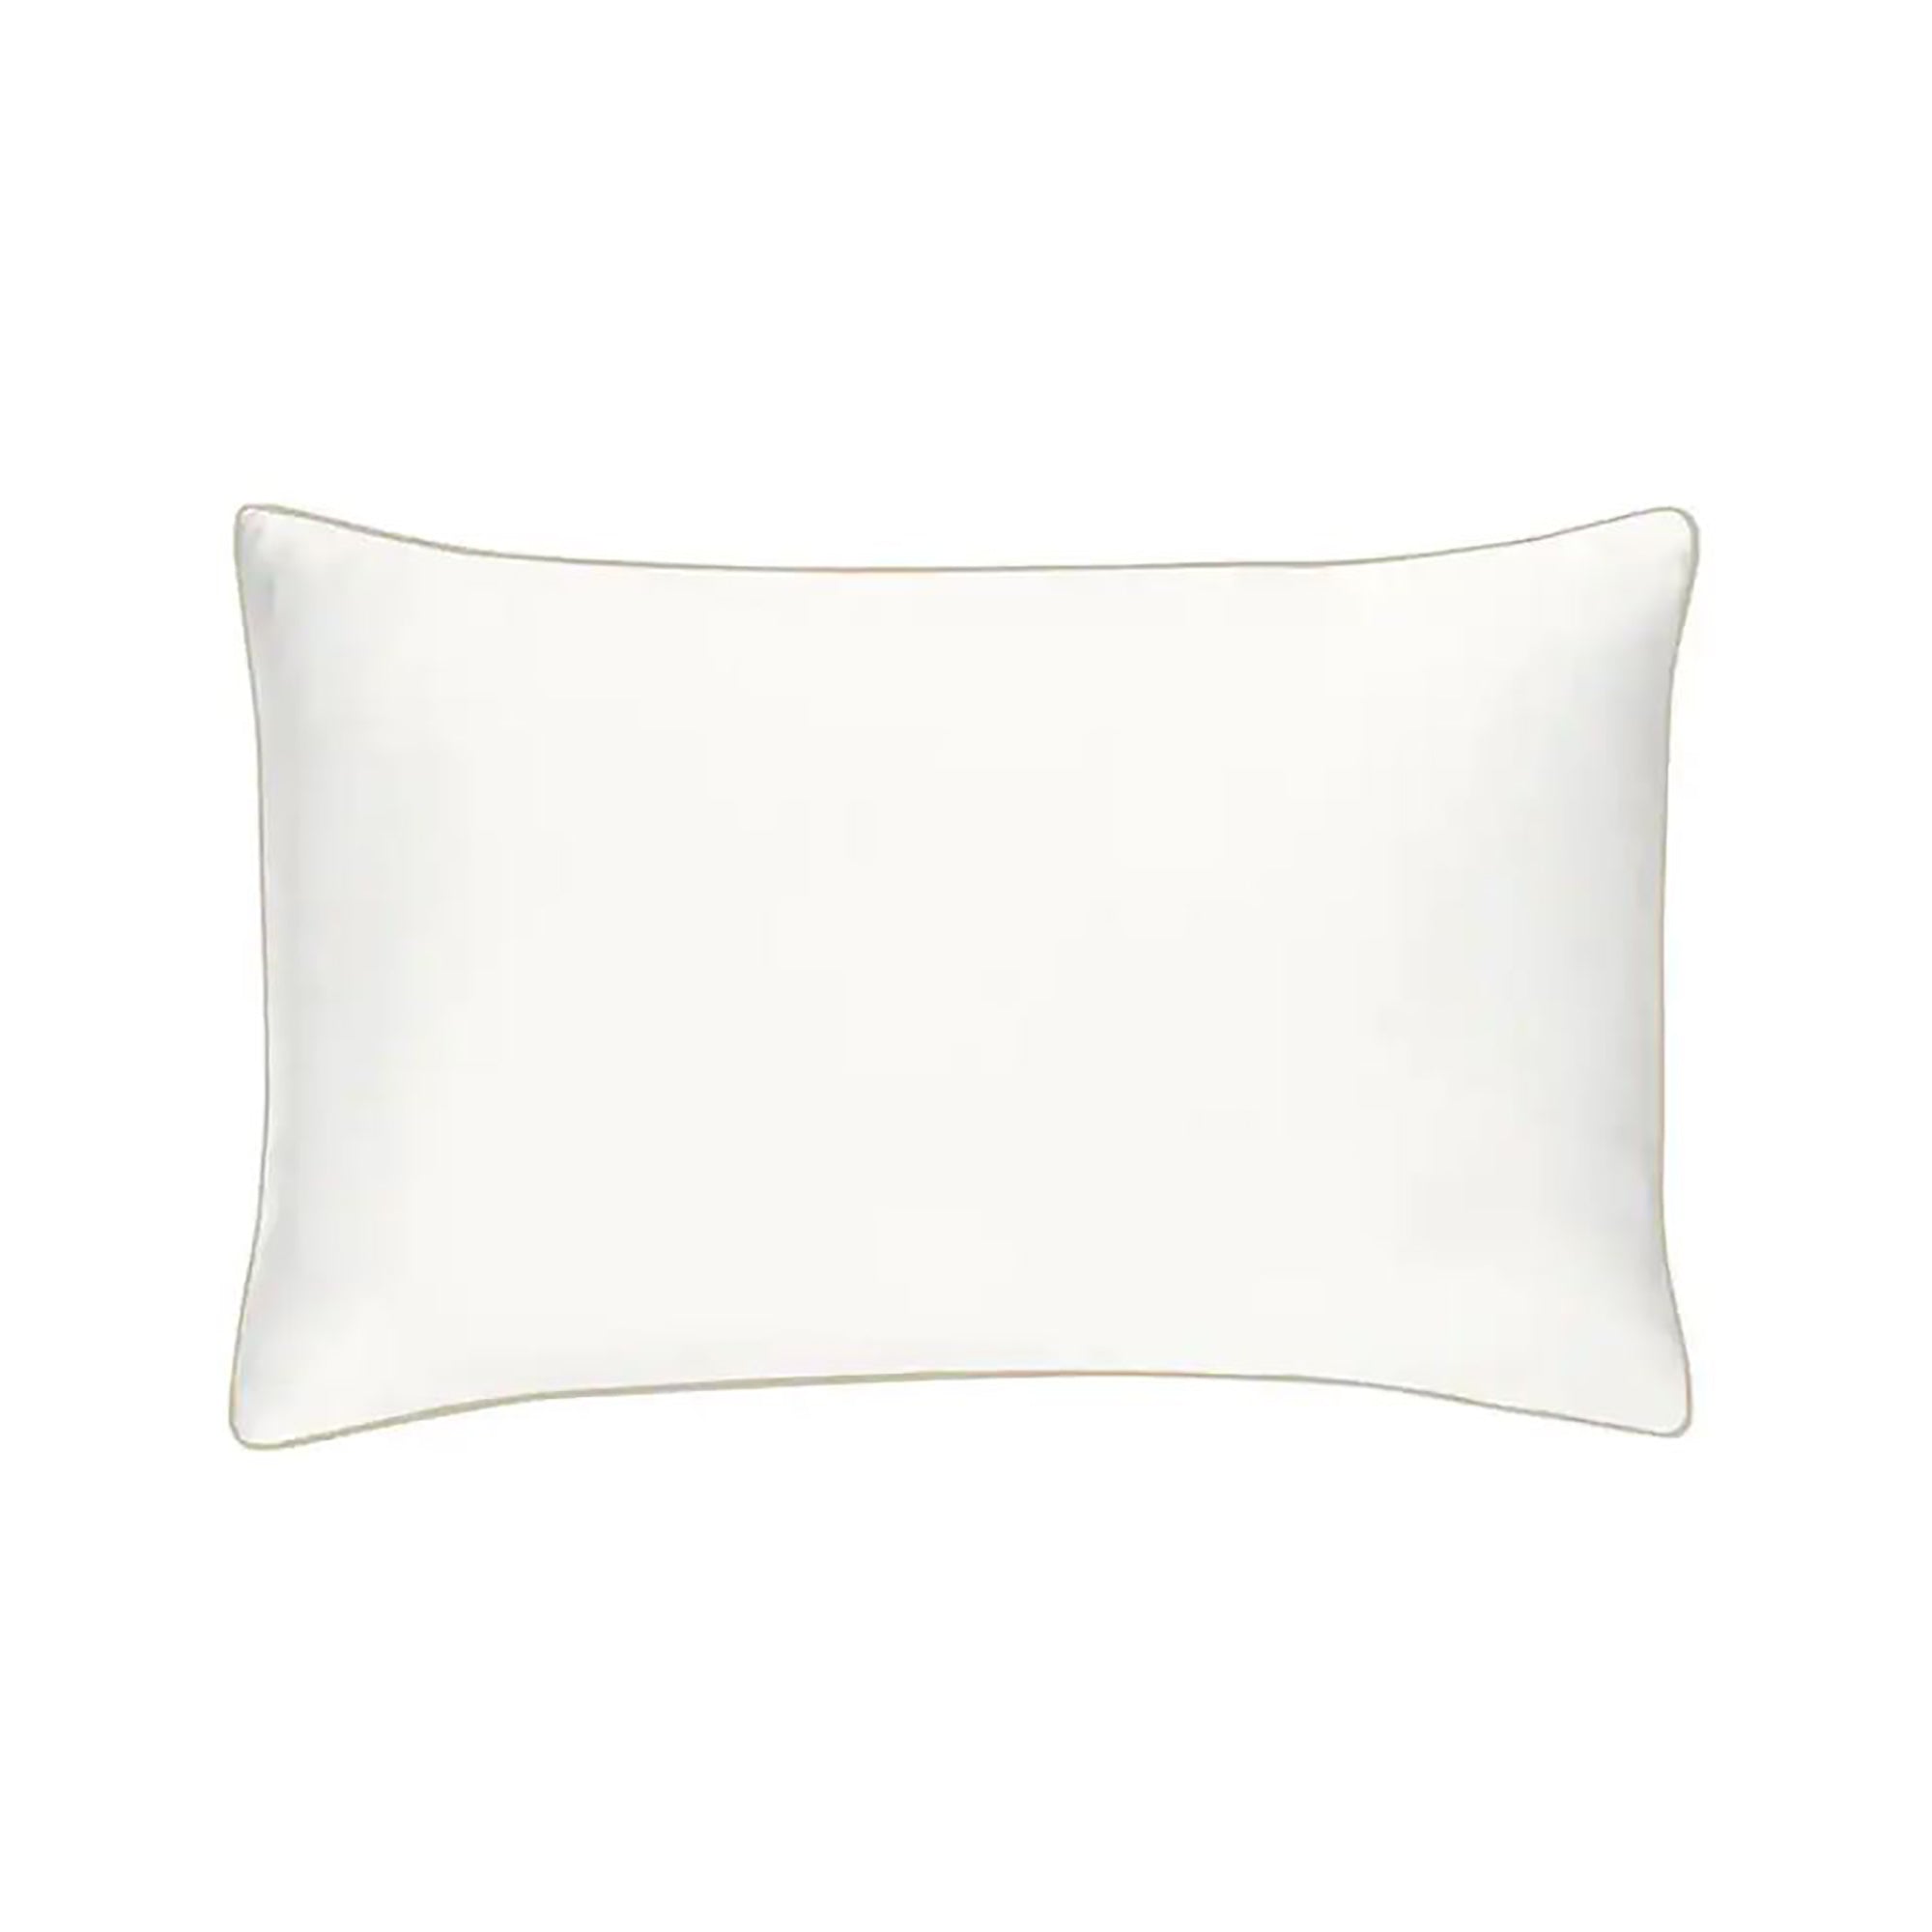 Iluminage Skin Rejuvenating Pillowcase with Anti-Aging Copper Technology / WHITE / SWATCH